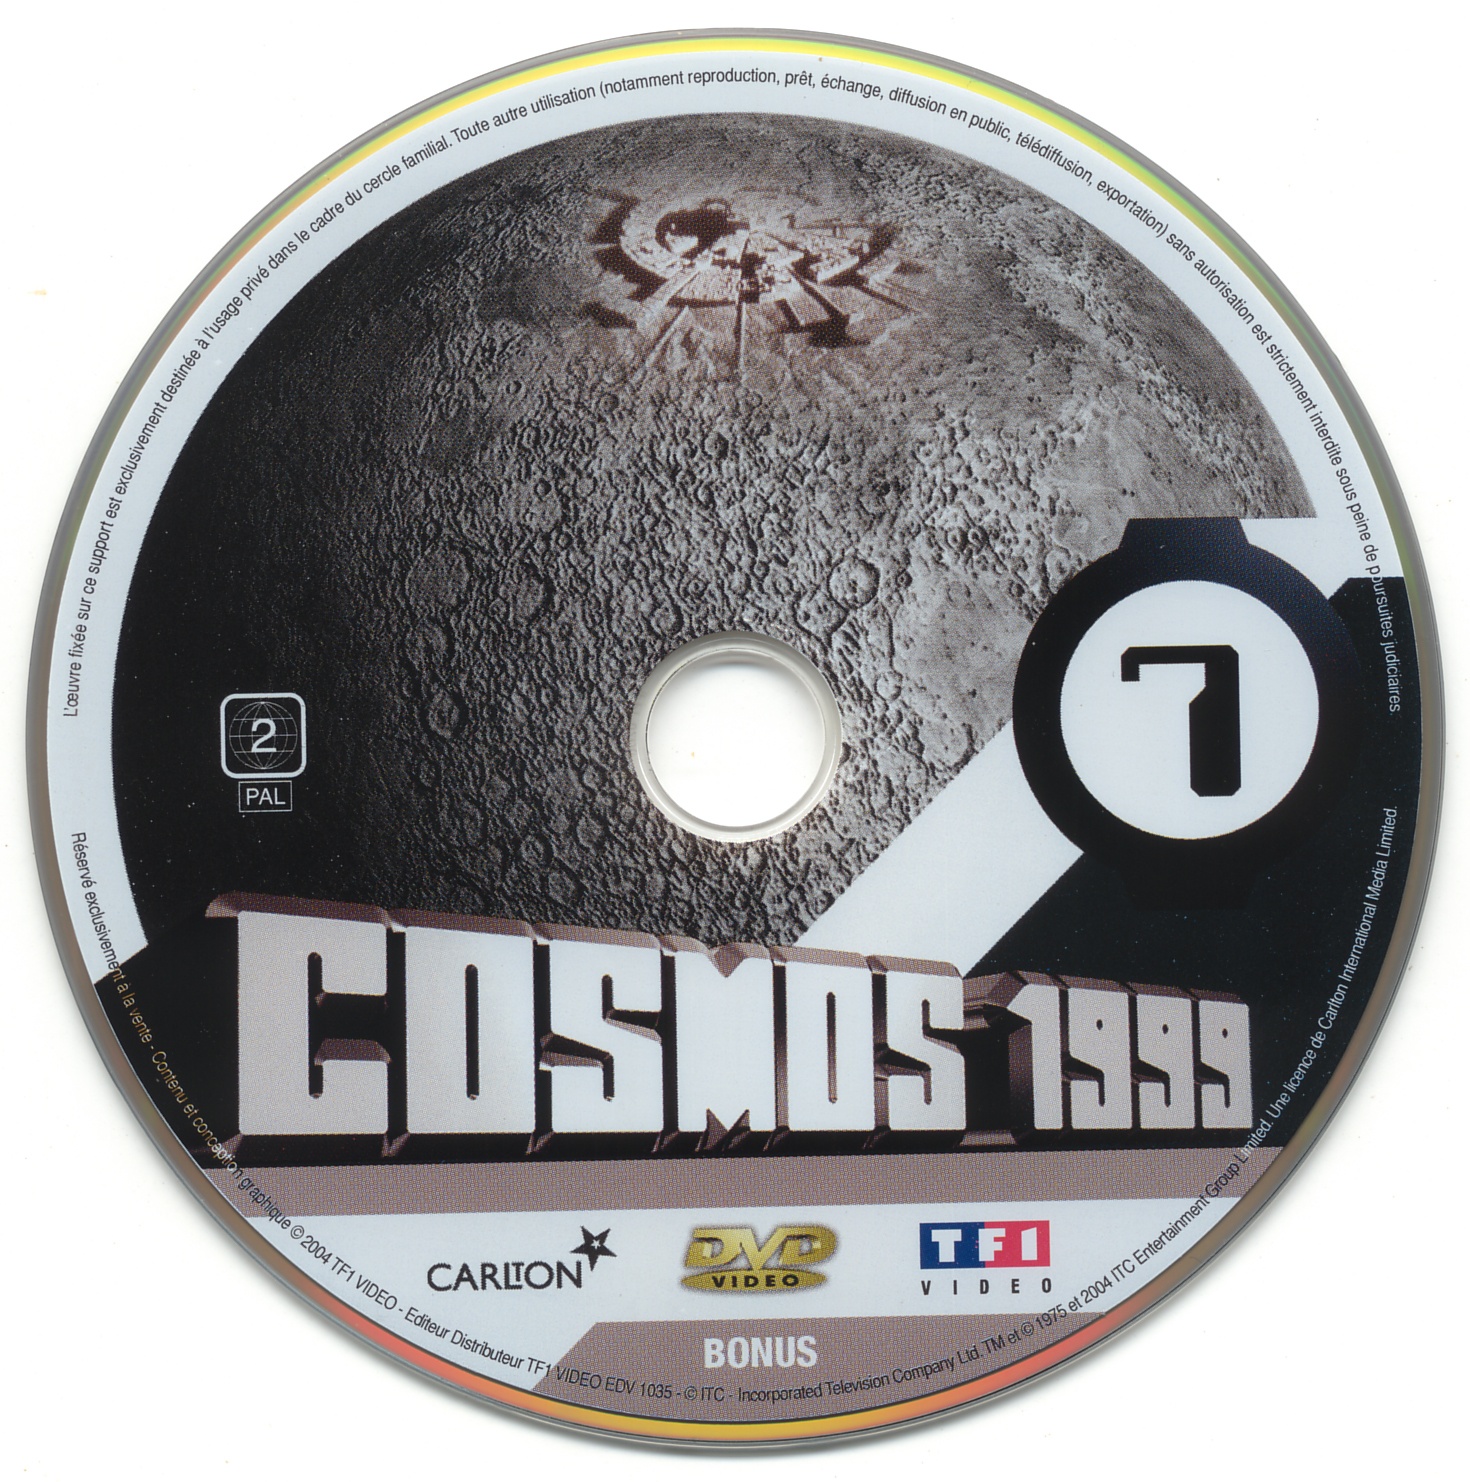 Cosmos 1999 saison 1 BONUS